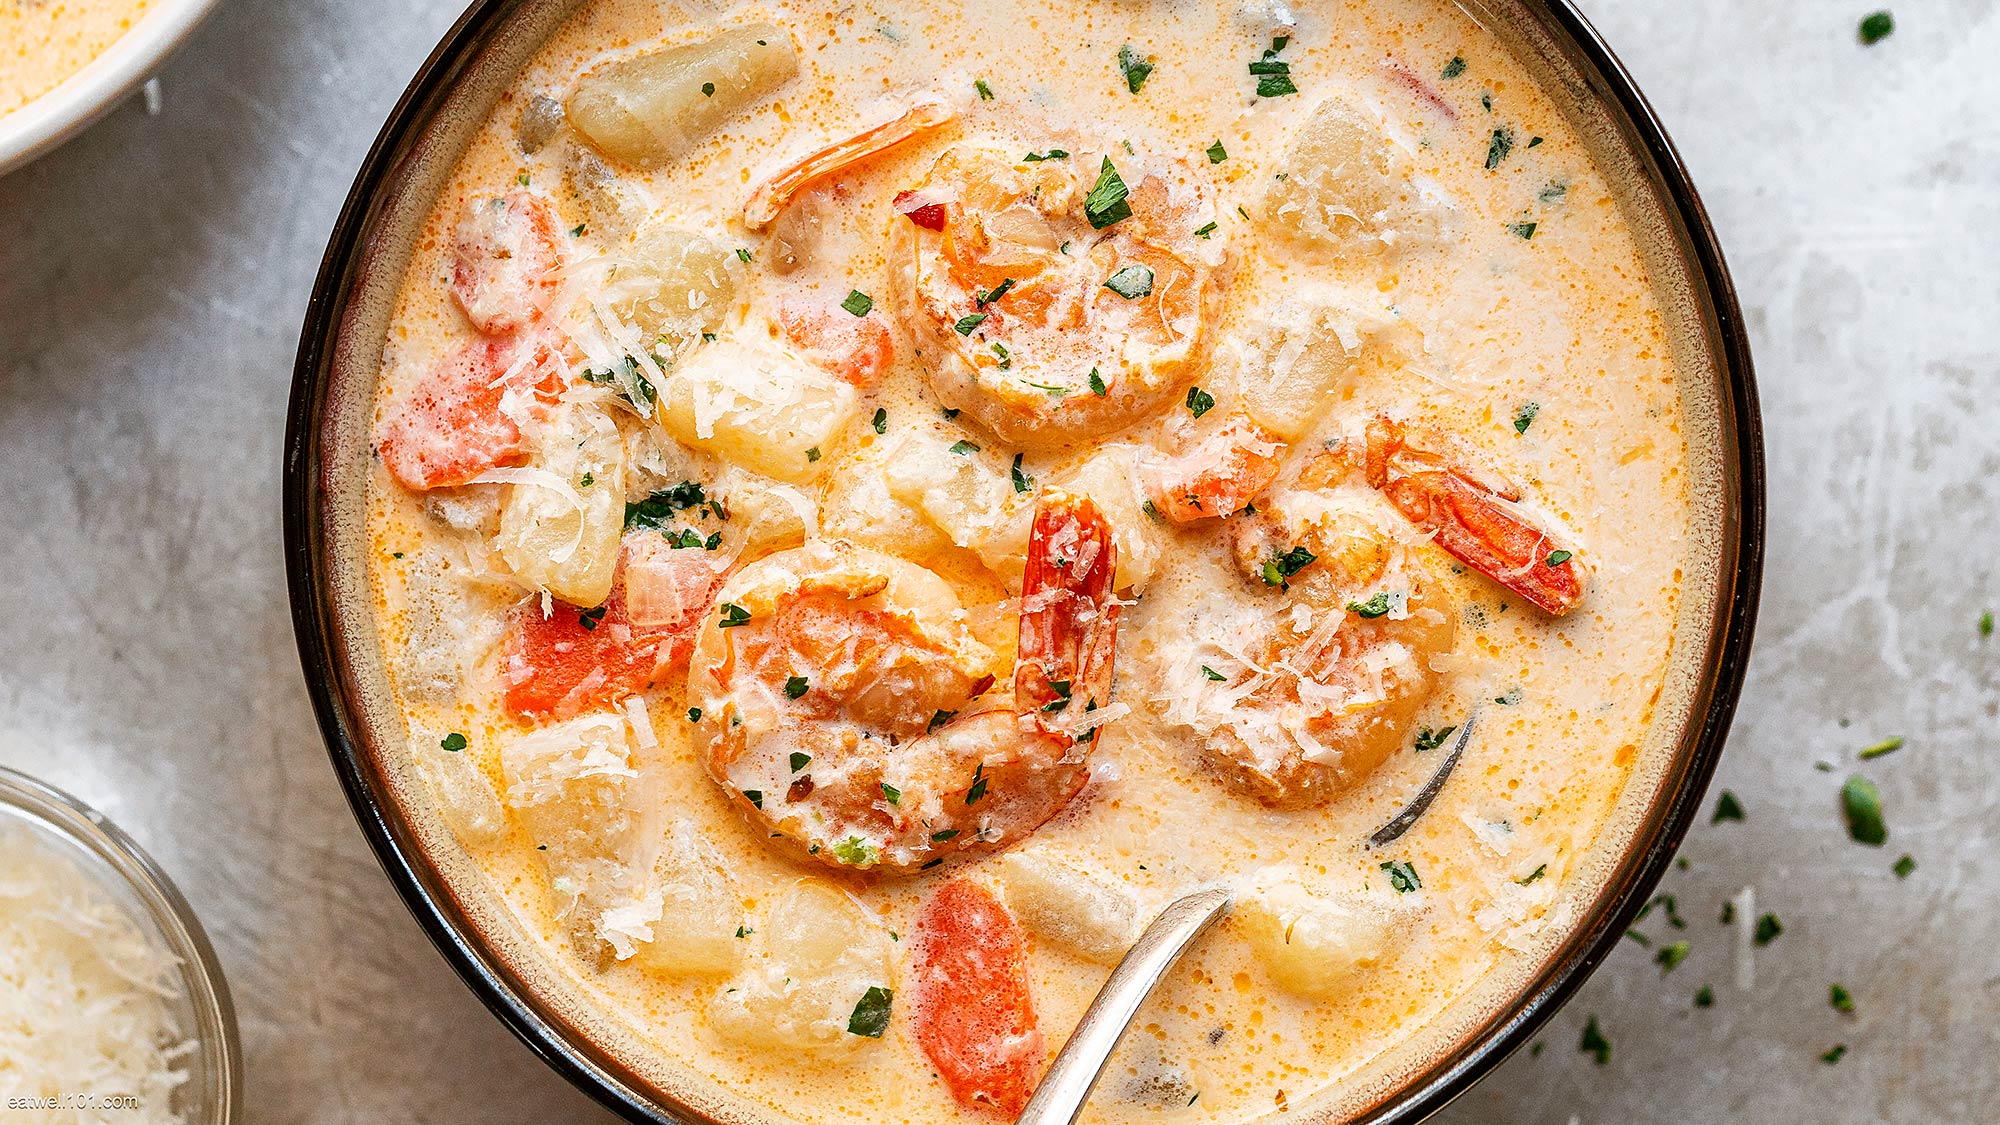 https://www.eatwell101.com/wp-content/uploads/2020/01/Creamy-Potato-Shrimp-Soup-recipe.jpg